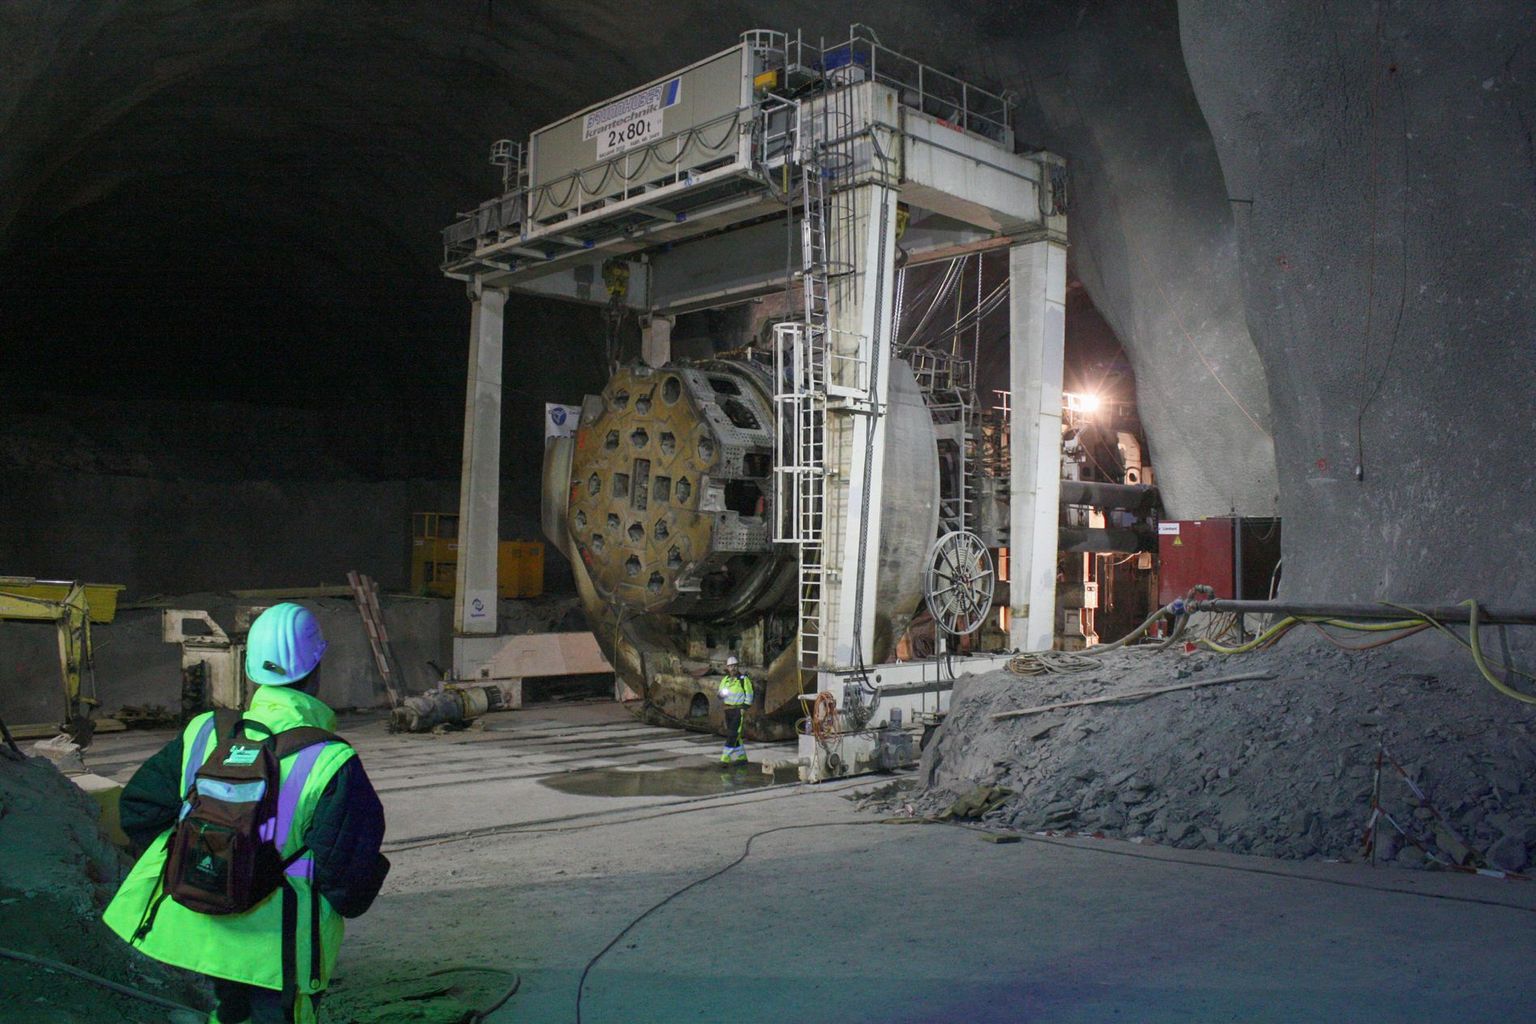 Tunneling machine after its work at AlpTransit / Ceneri (TI)